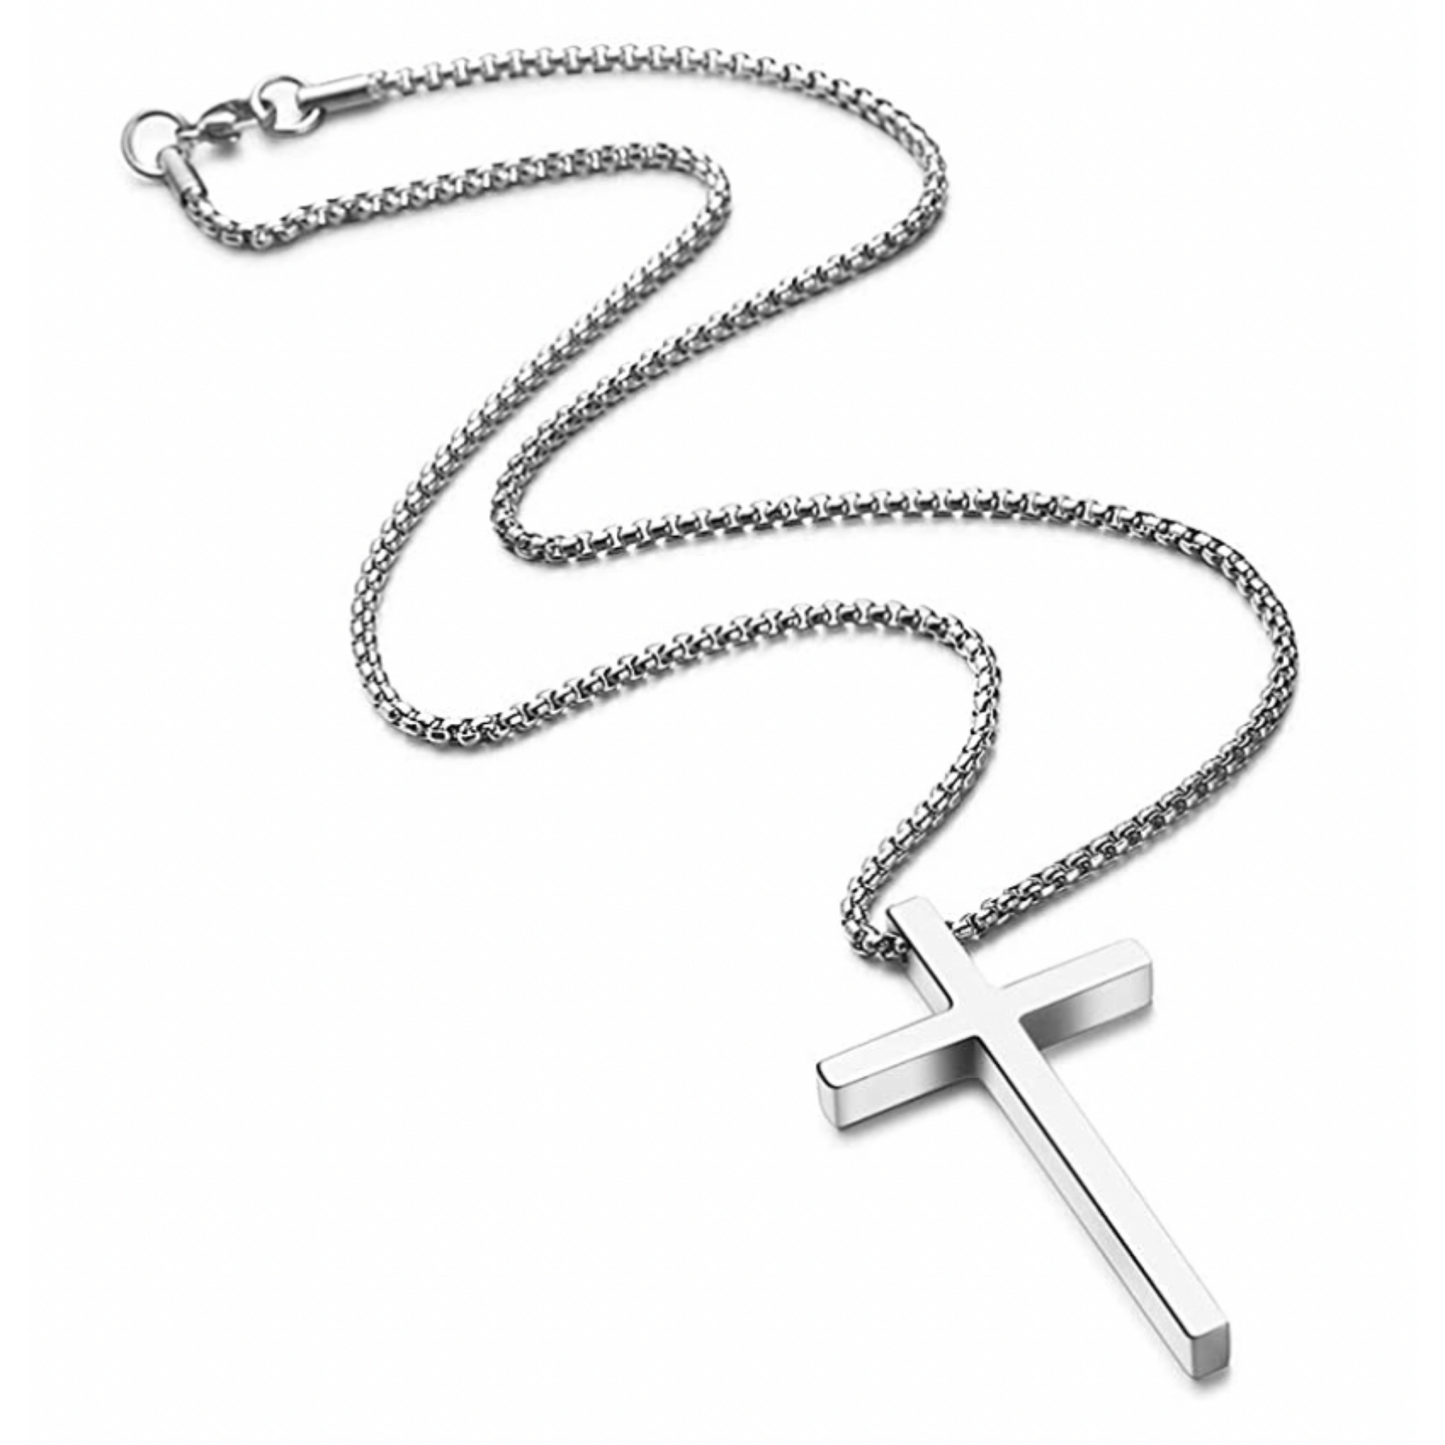 Cross Pendant Necklace (Silver)